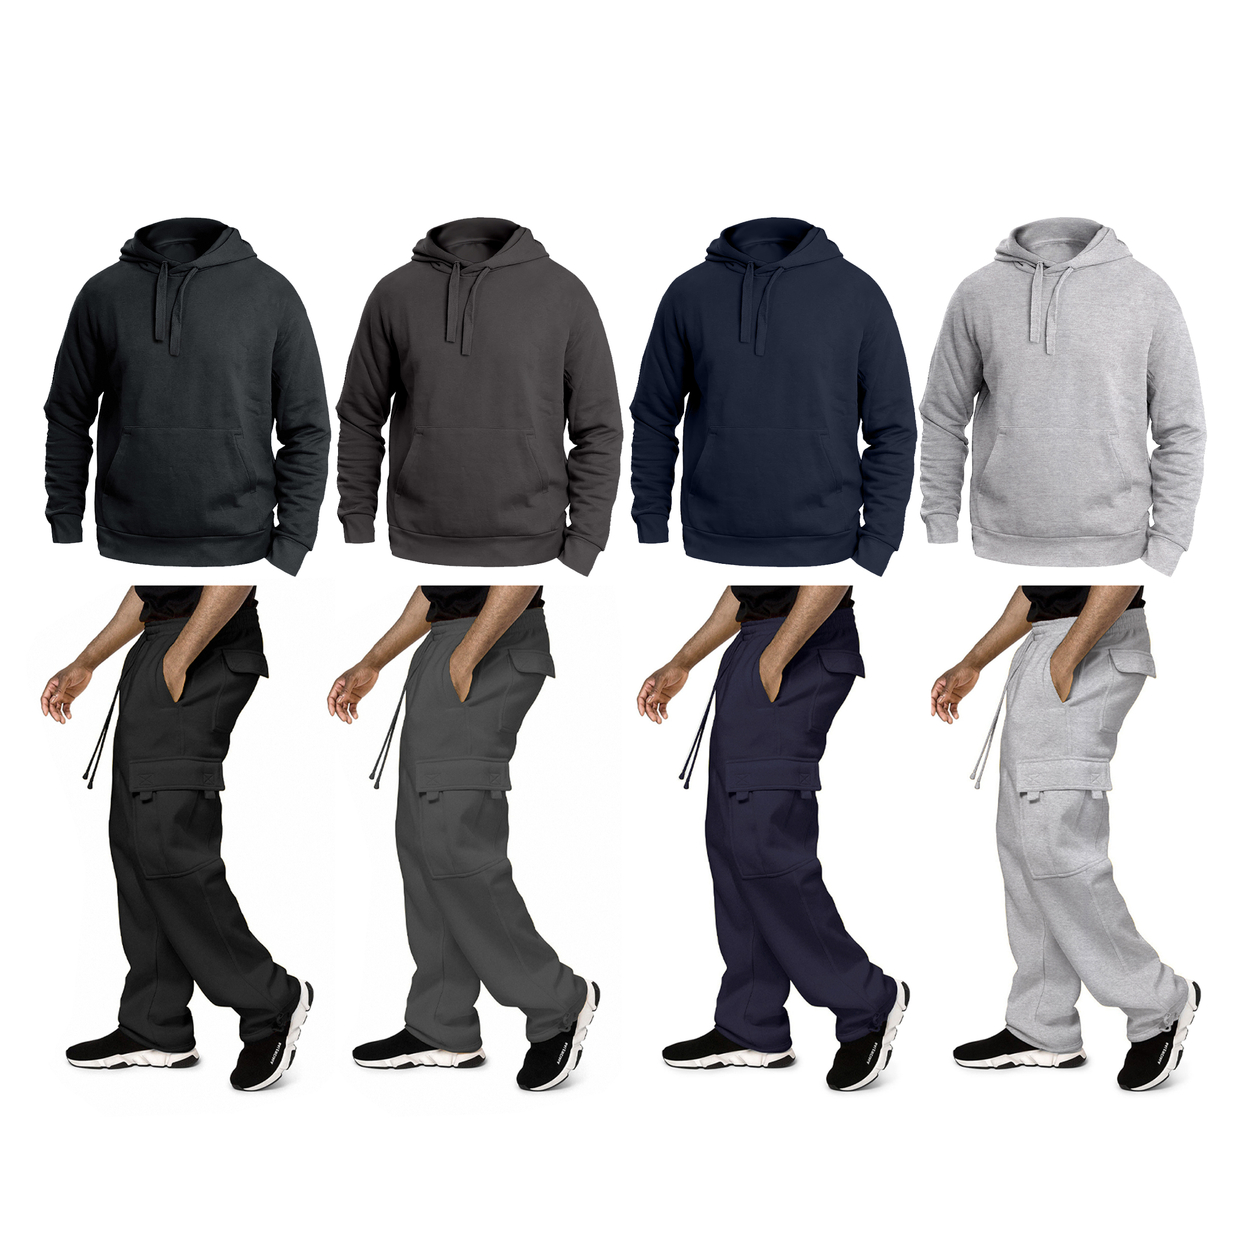 2-Pack: Men's Big & Tall Winter Warm Cozy Athletic Fleece Lined Multi-Pocket Cargo Sweatsuit - Navy, Xx-large